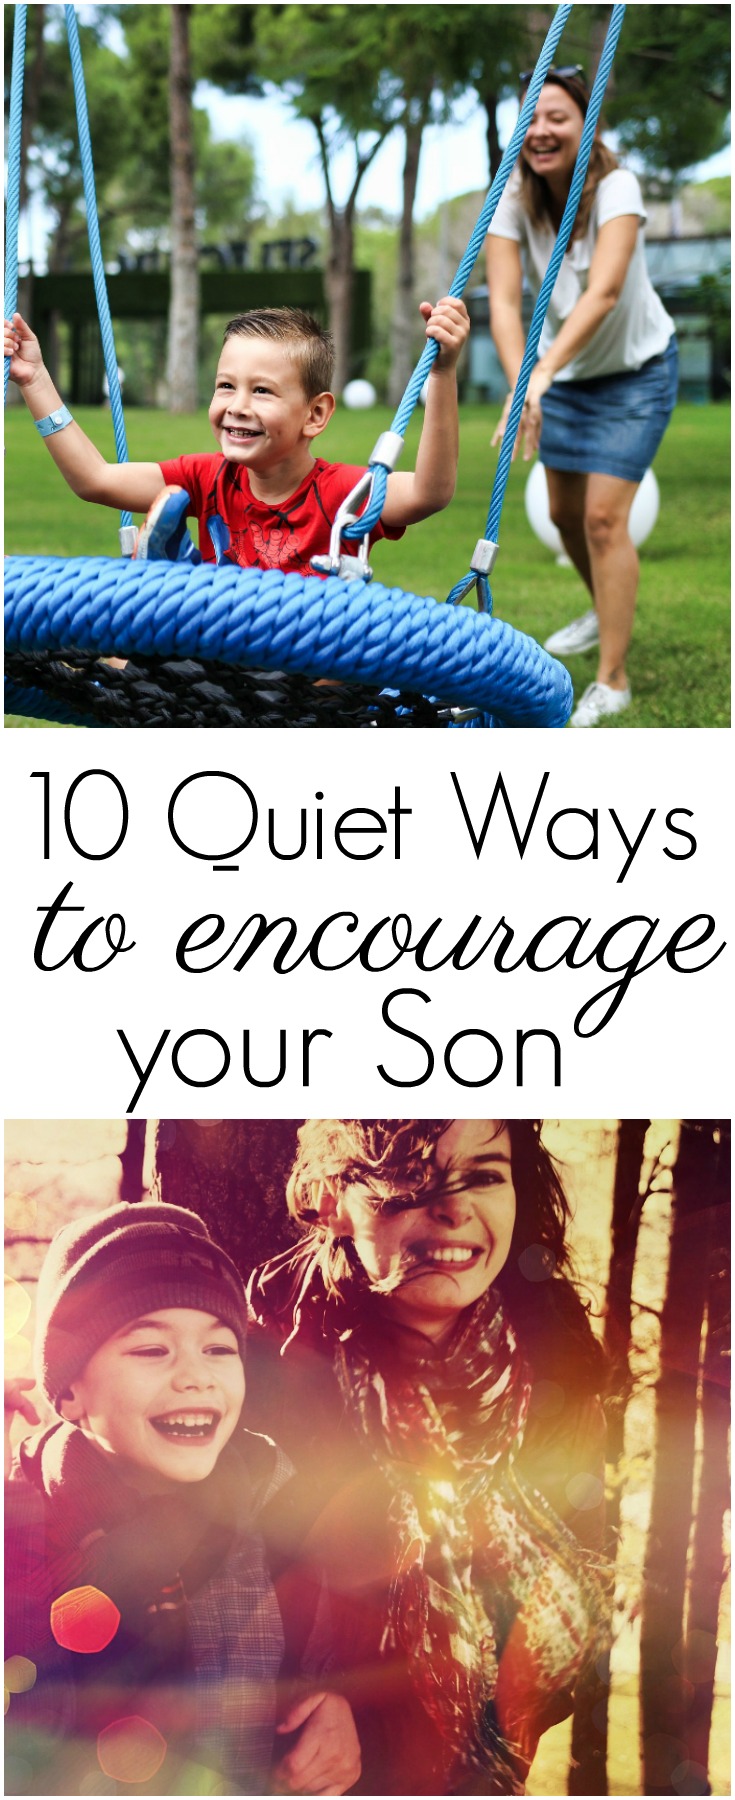 10 Quiet Ways to Encourage your Son